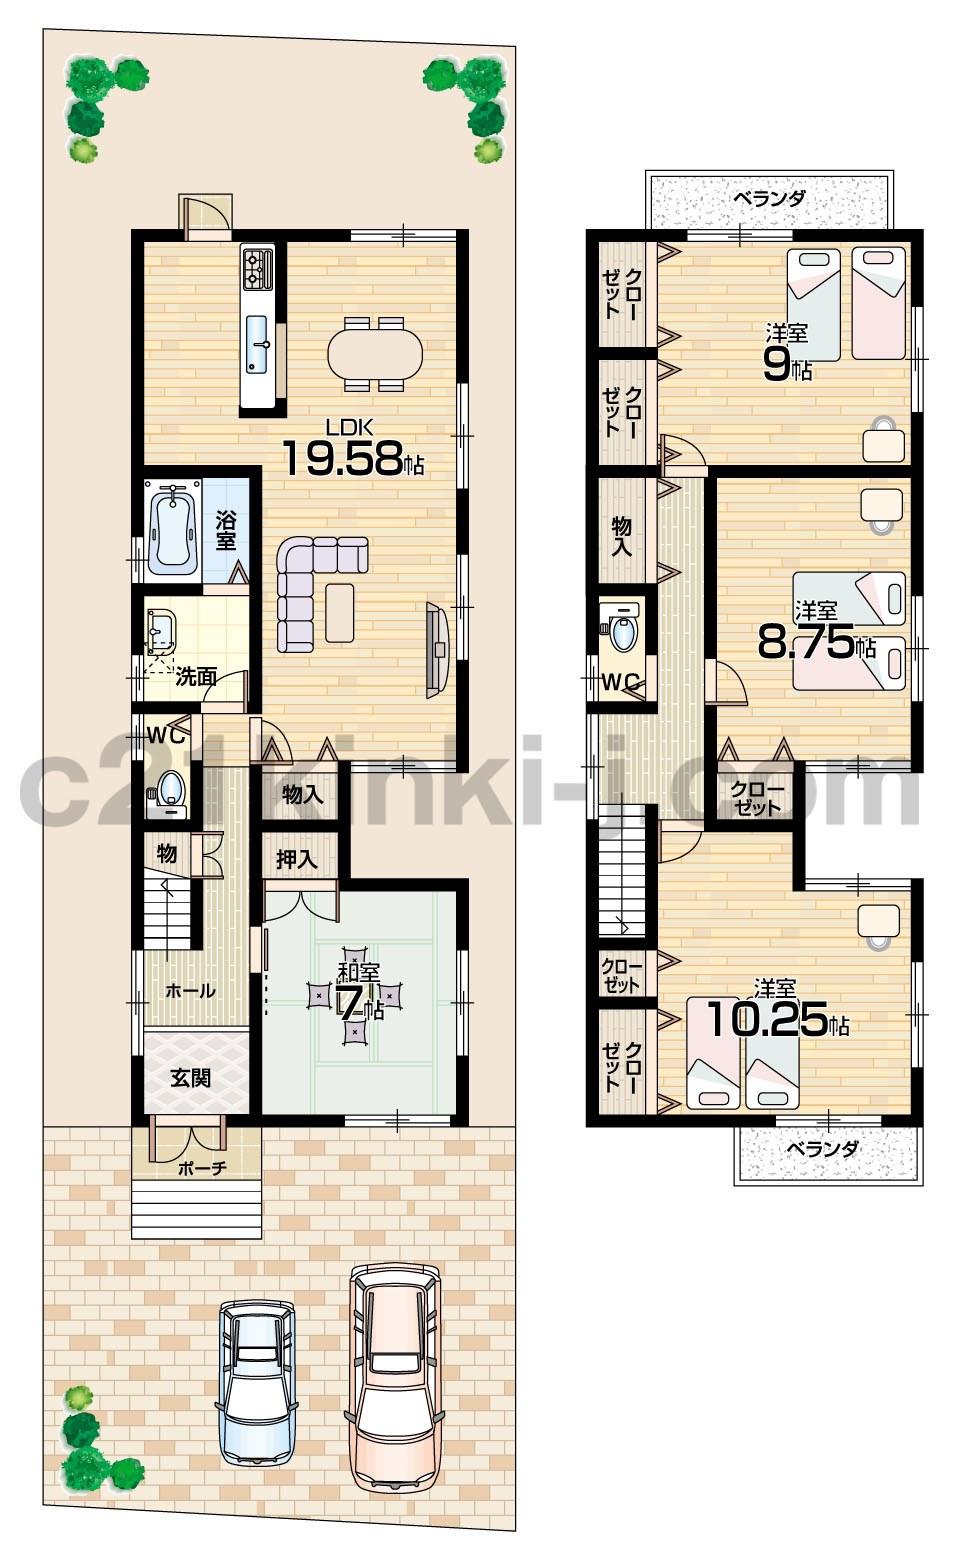 Floor plan. (No. 5 locations), Price 29 million yen, 4LDK, Land area 161.24 sq m , Building area 127.18 sq m